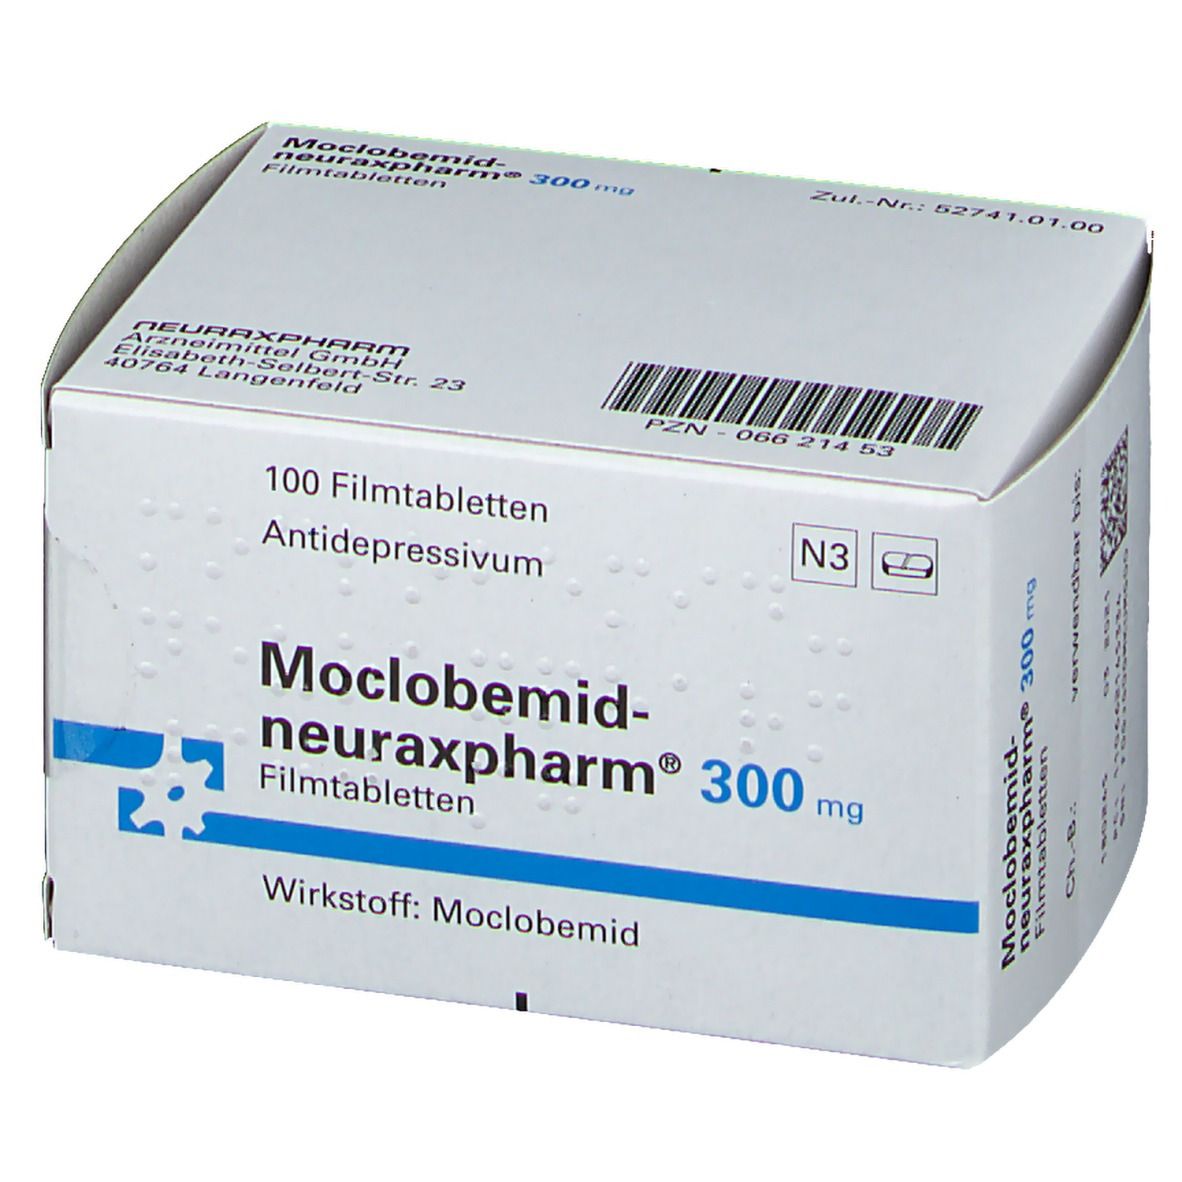 Moclobemid-neuraxpharm® 300 mg